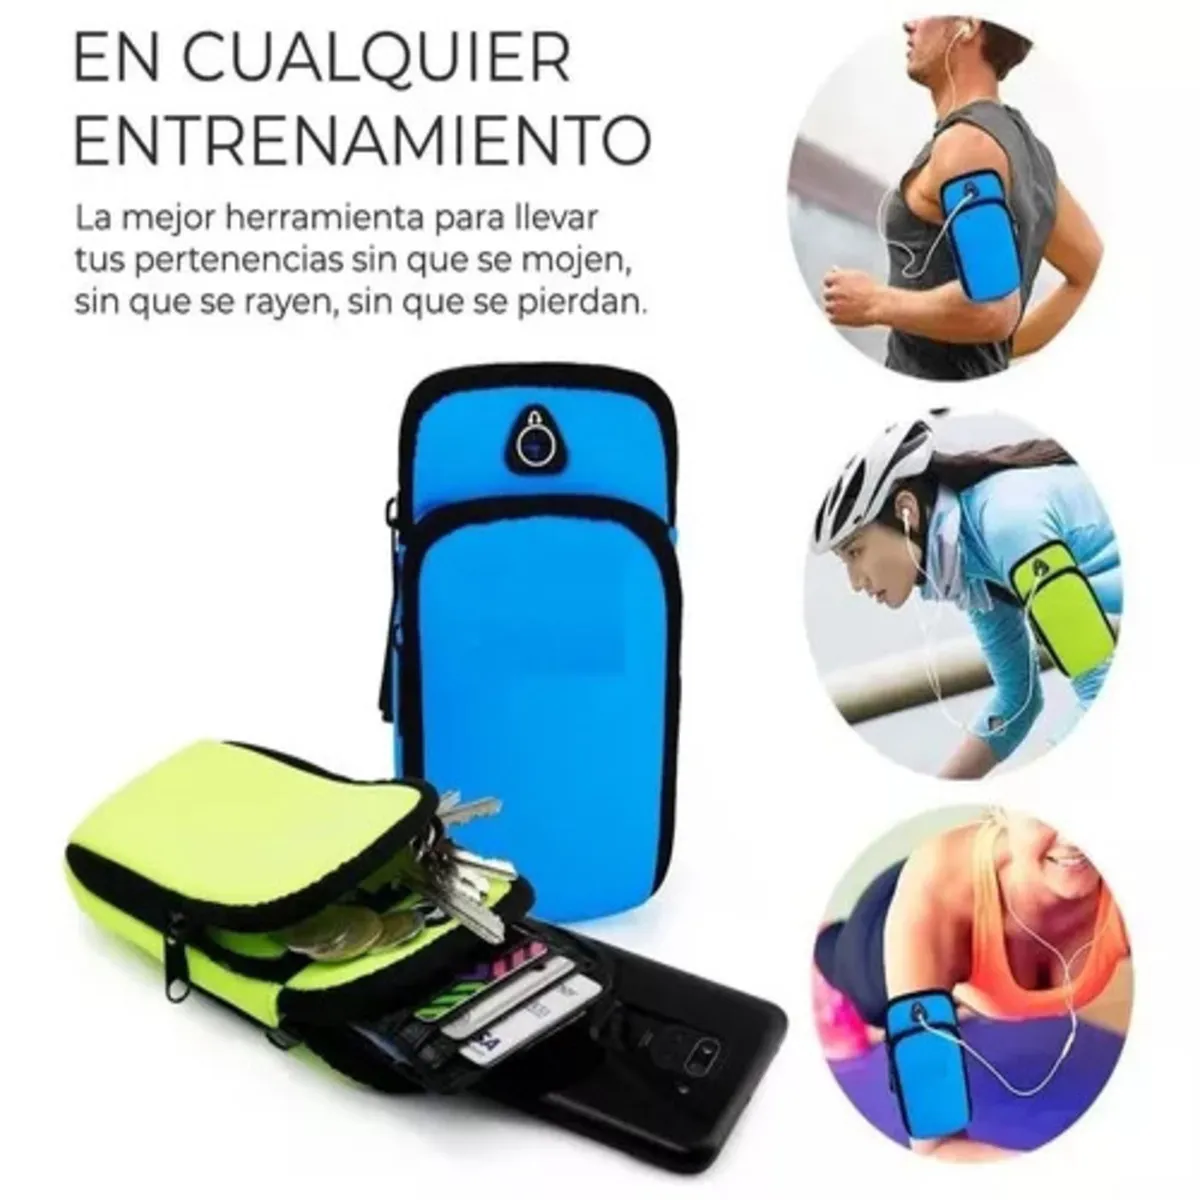 Funda Protectora Deportiva Gym Para Celular iPhone Android